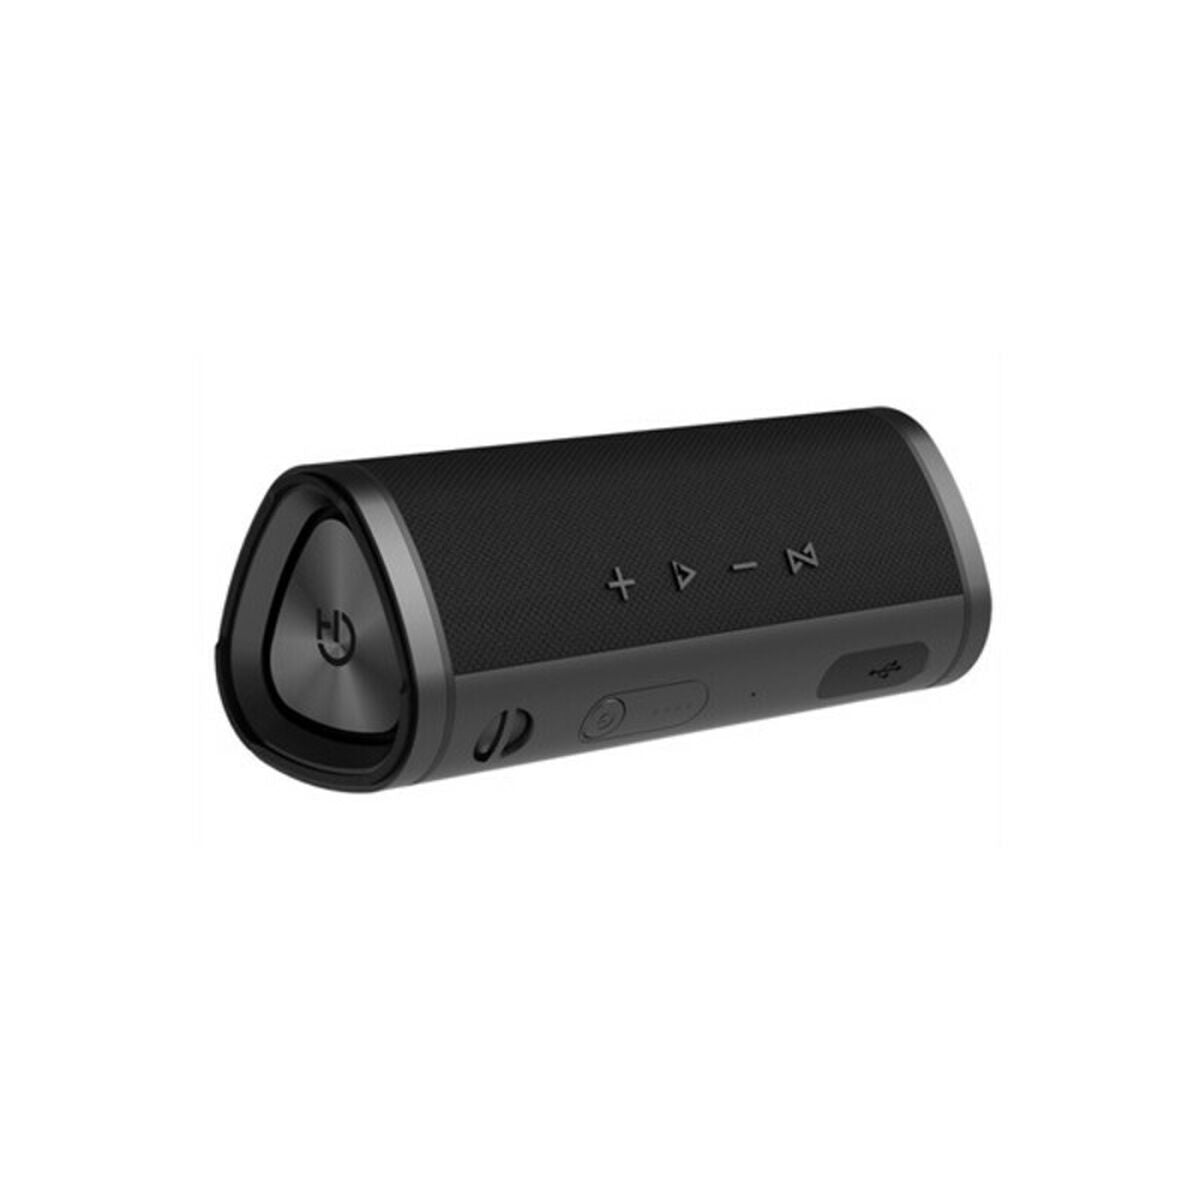 Draadloze luidspreker met Bluetooth Hiditec SPBL10005 3600 mAh 10W Zwart